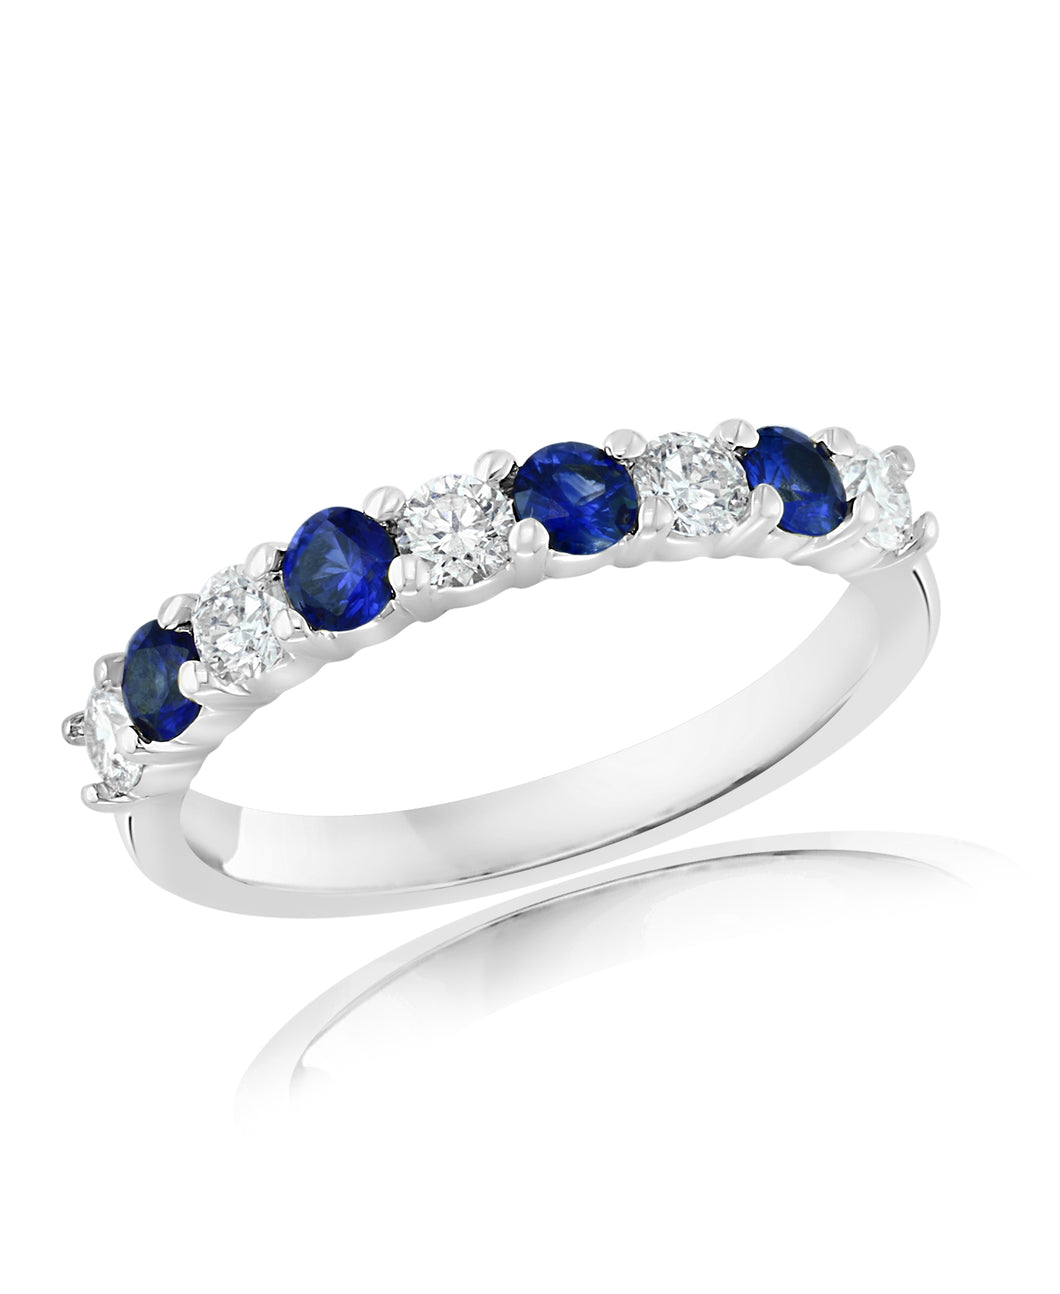 14K White Gold Sapphire & Diamond Ring